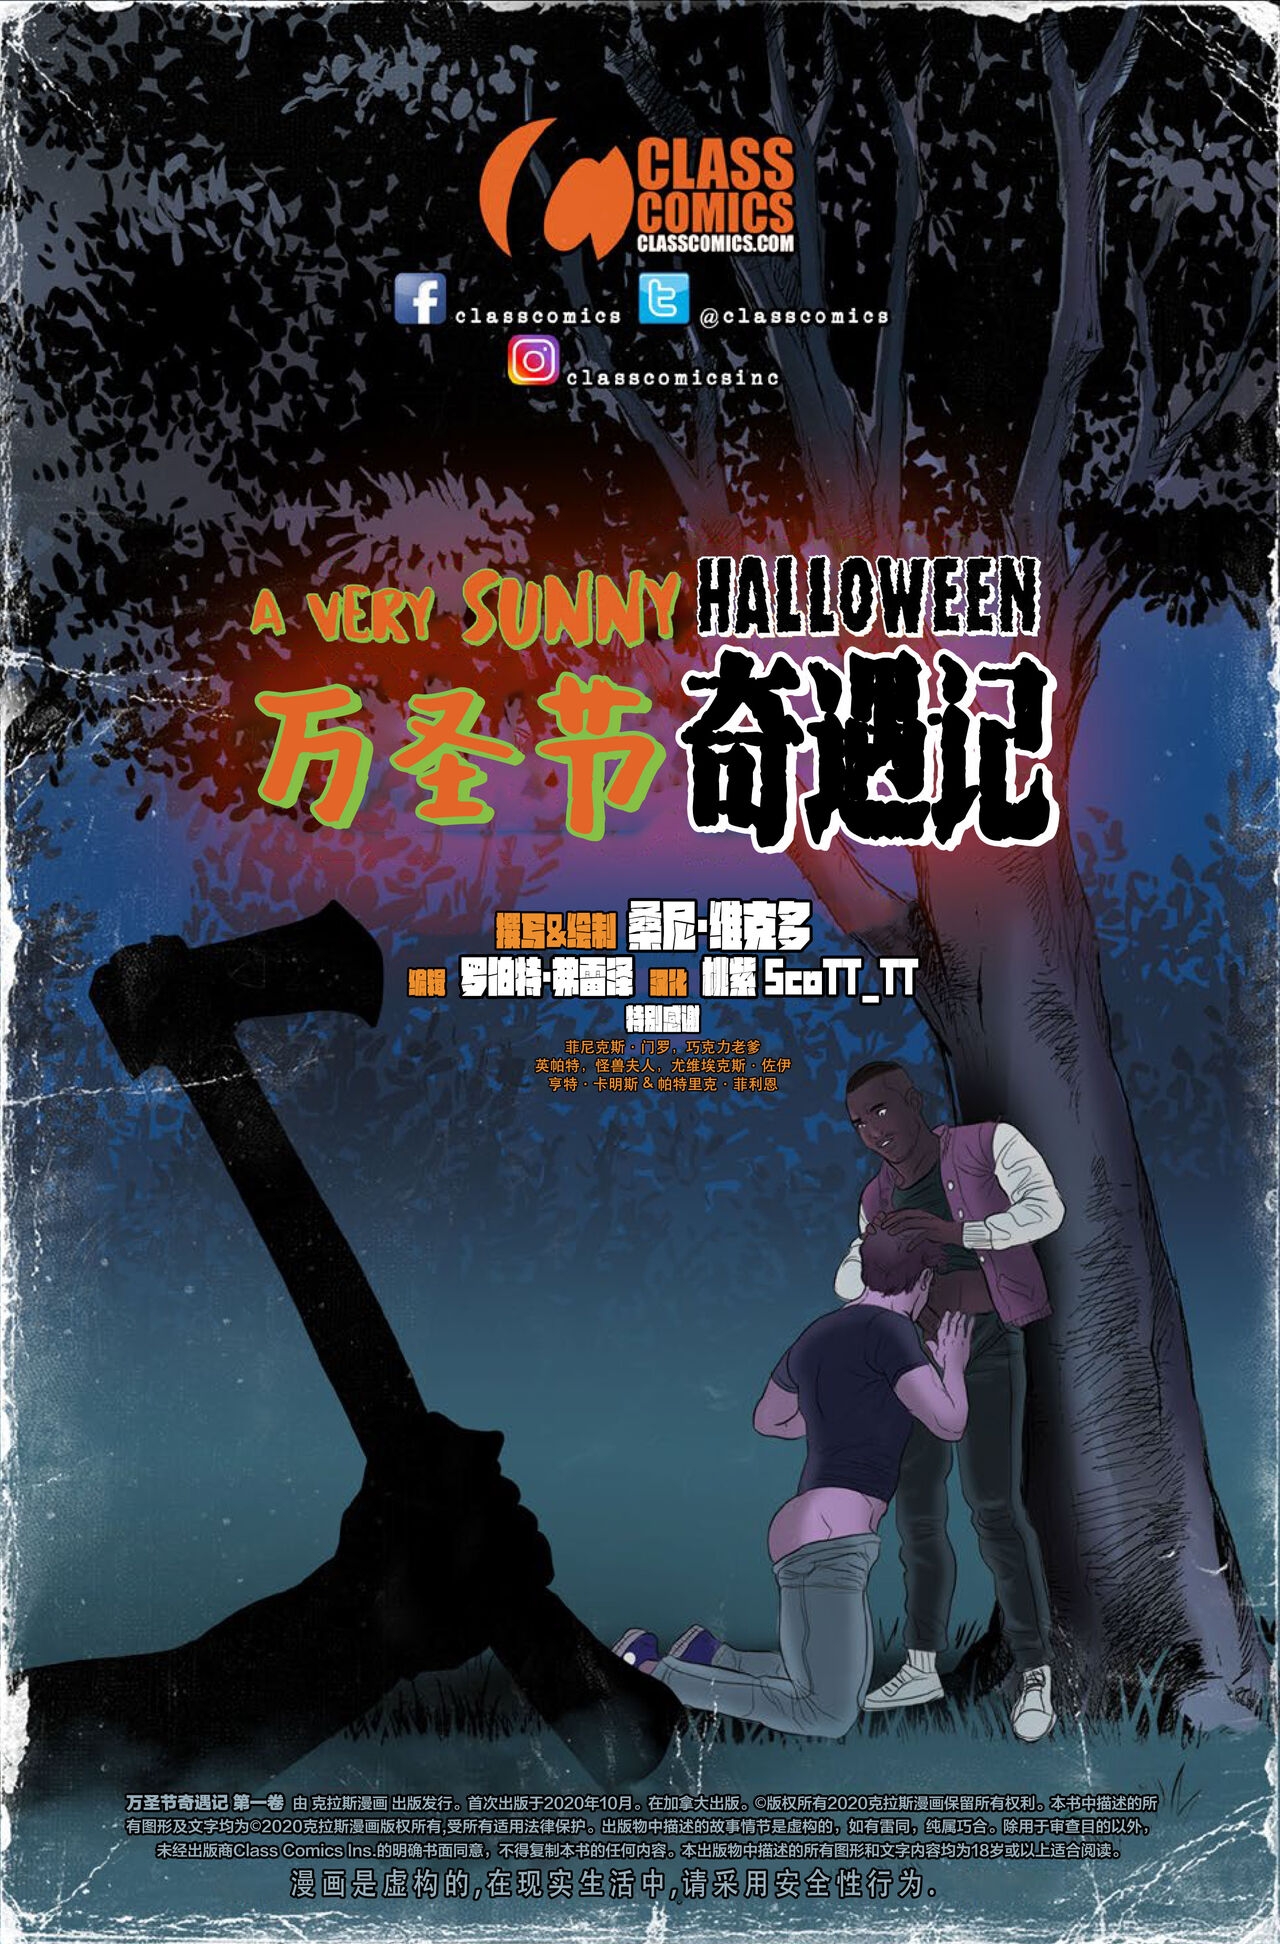 [Sunny Victor] A very sunny Halloween #1｜万圣节奇遇记 [Class Comics] [Chinese] [桃紫 ScoTT_TT] 1